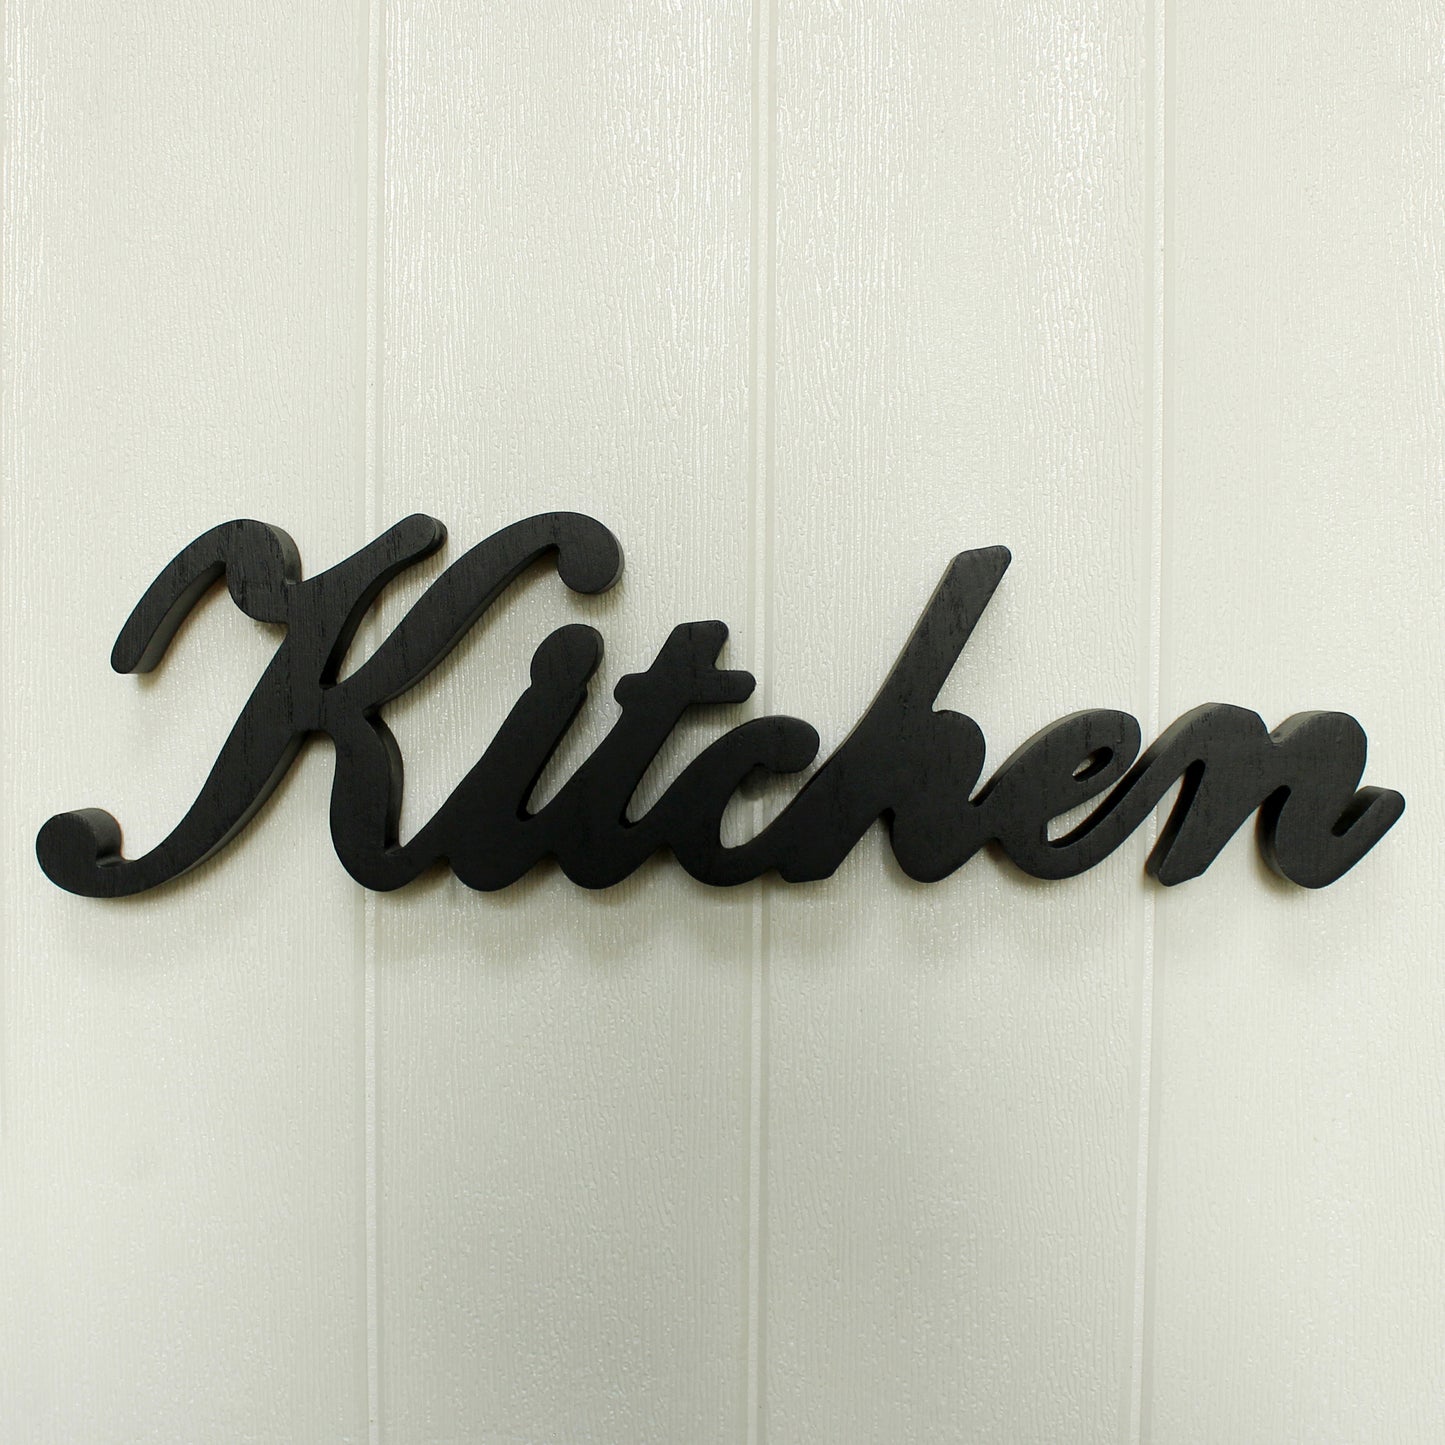 CVHOMEDECO. Rustic Matt Black Wooden Words Sign Free Standing "Kitchen" Desk/Table/Shelf/Door/Home Wall Decoration Art, 15.5 x 4.25 x 1 Inch